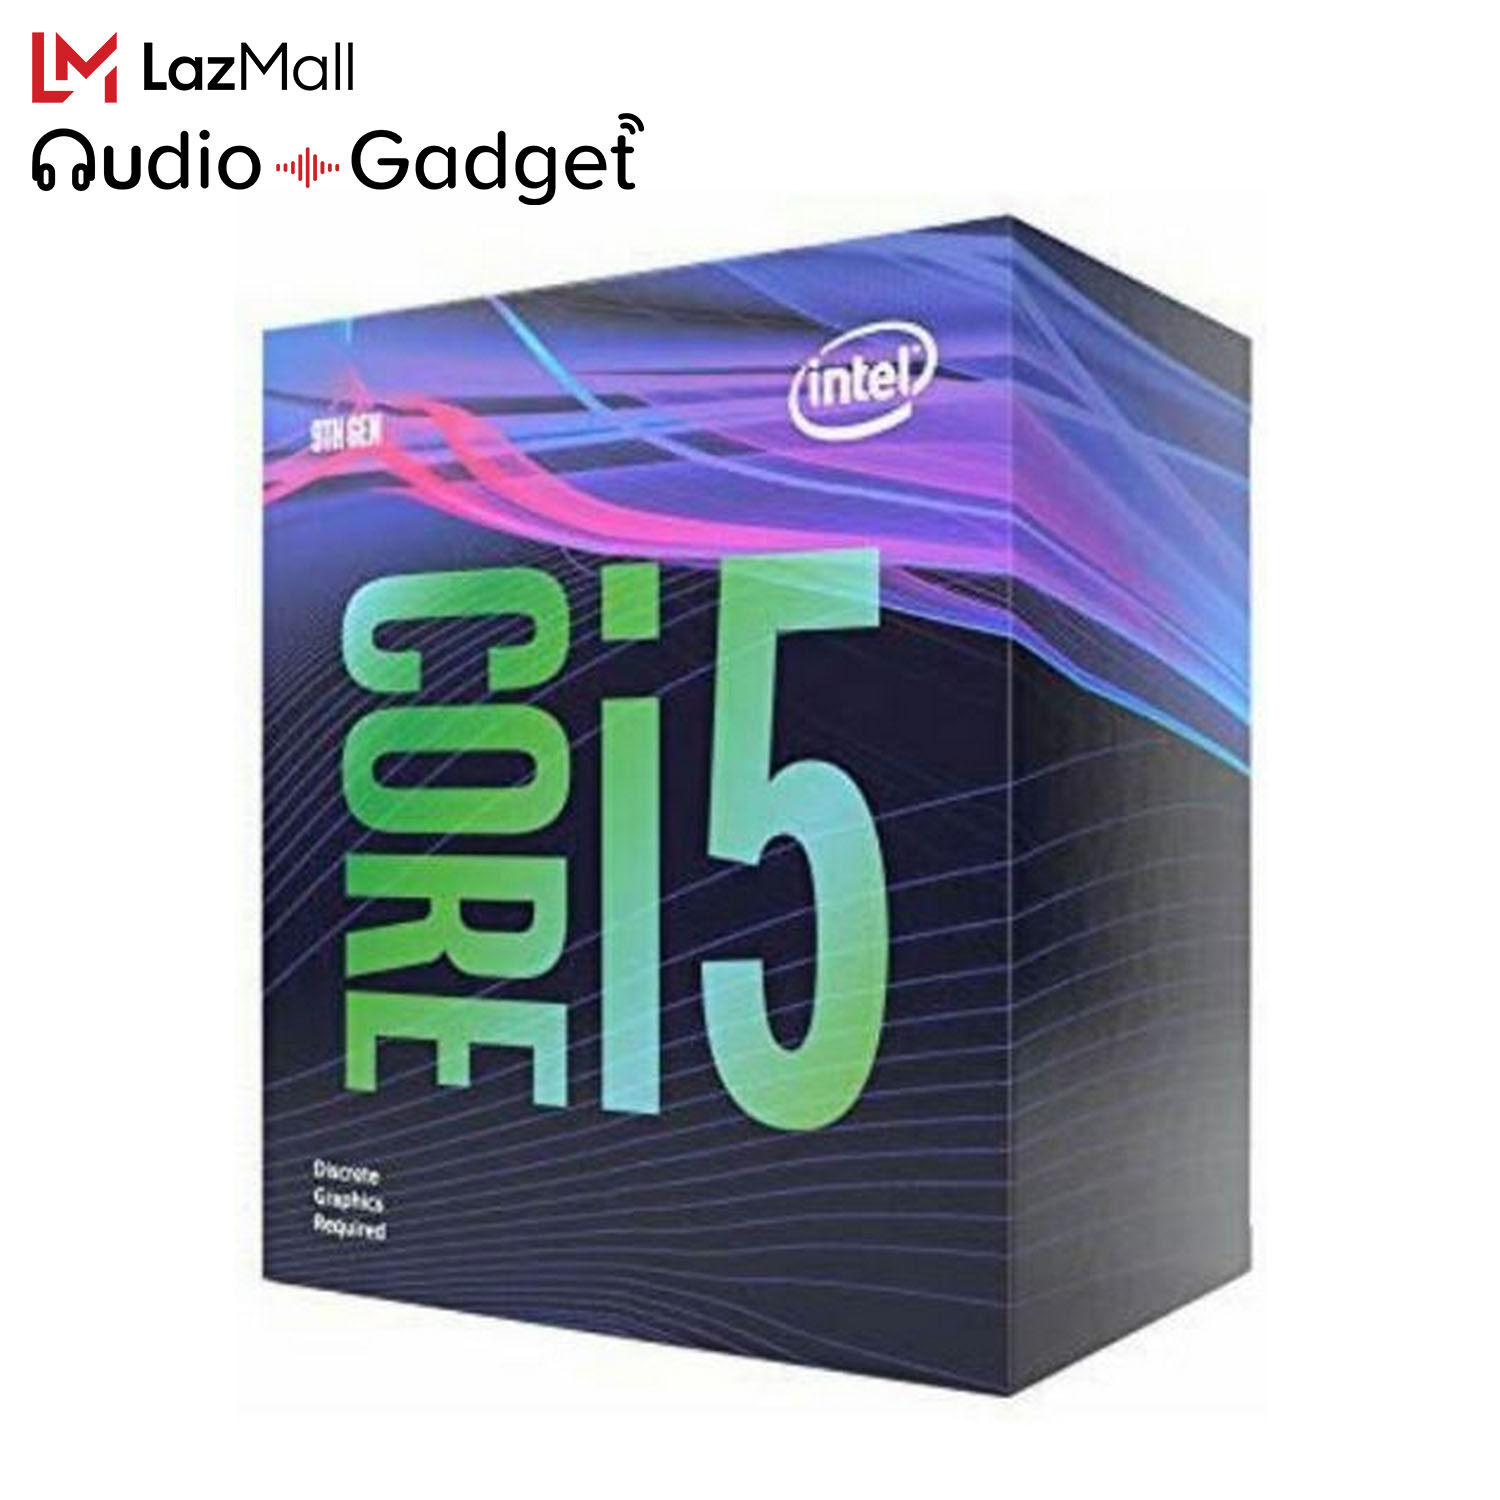 Intel Cpu Intel Core I5-9400f (2.90ghz, 6/6, 9mb, Lga1151v2), No Graphics, Fan Cooling, Turbo, Cores 6/6 - (bx80684i59400f). 